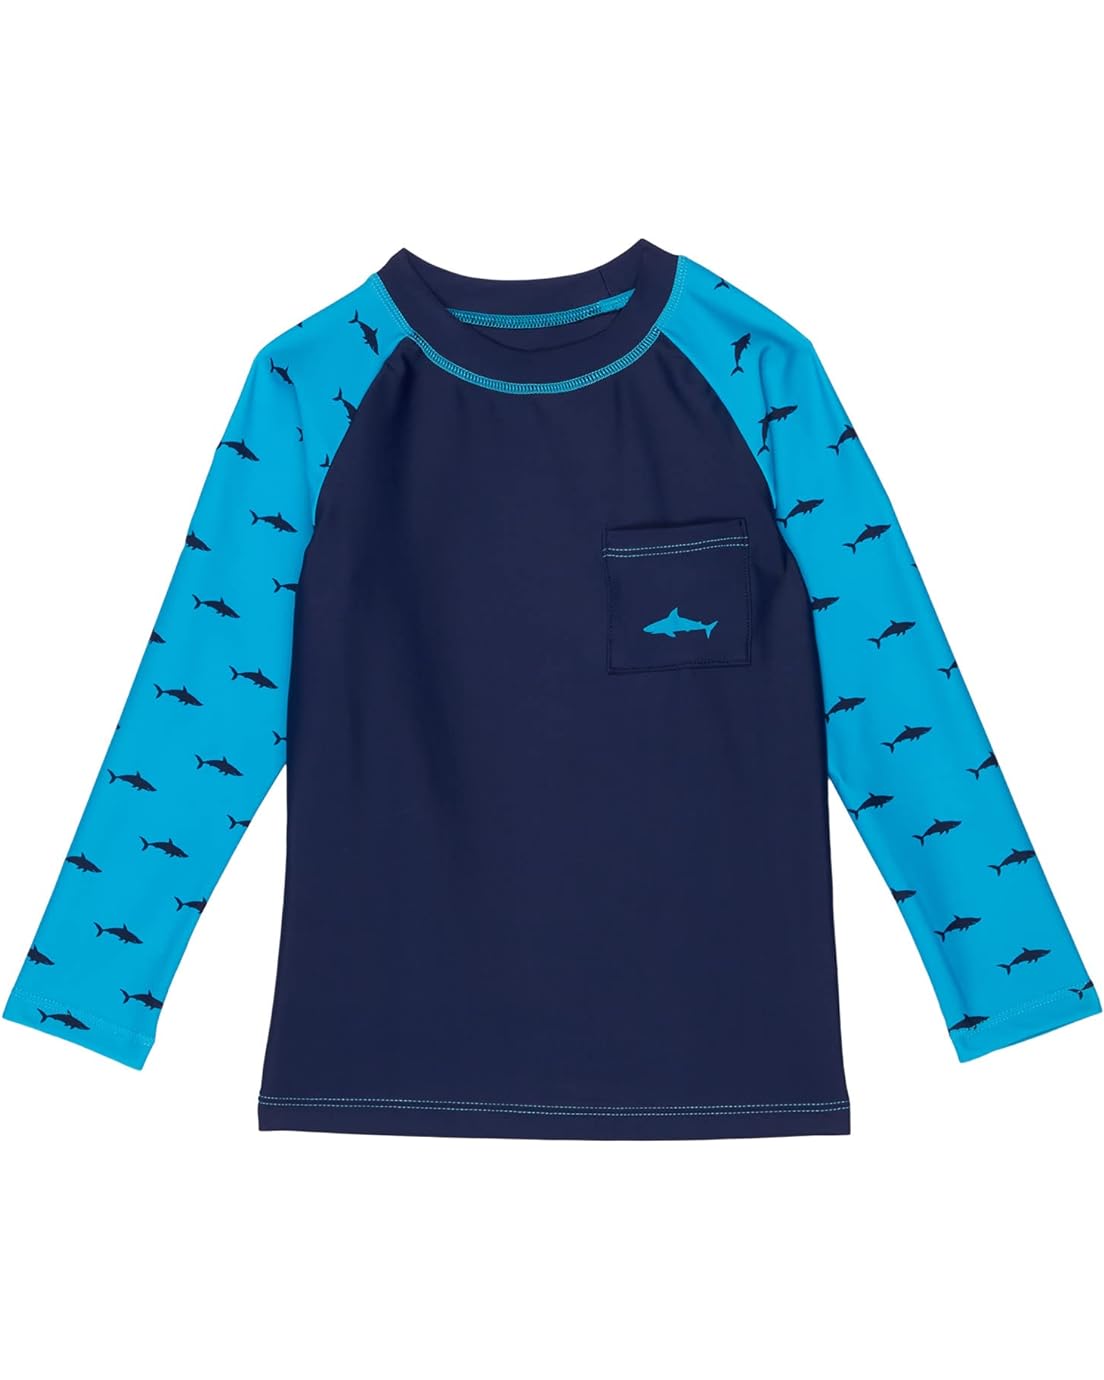 Hatley Kids Silhouette Sharks Long Sleeve Rashguard (Toddleru002FLittle Kidsu002FBig Kids)